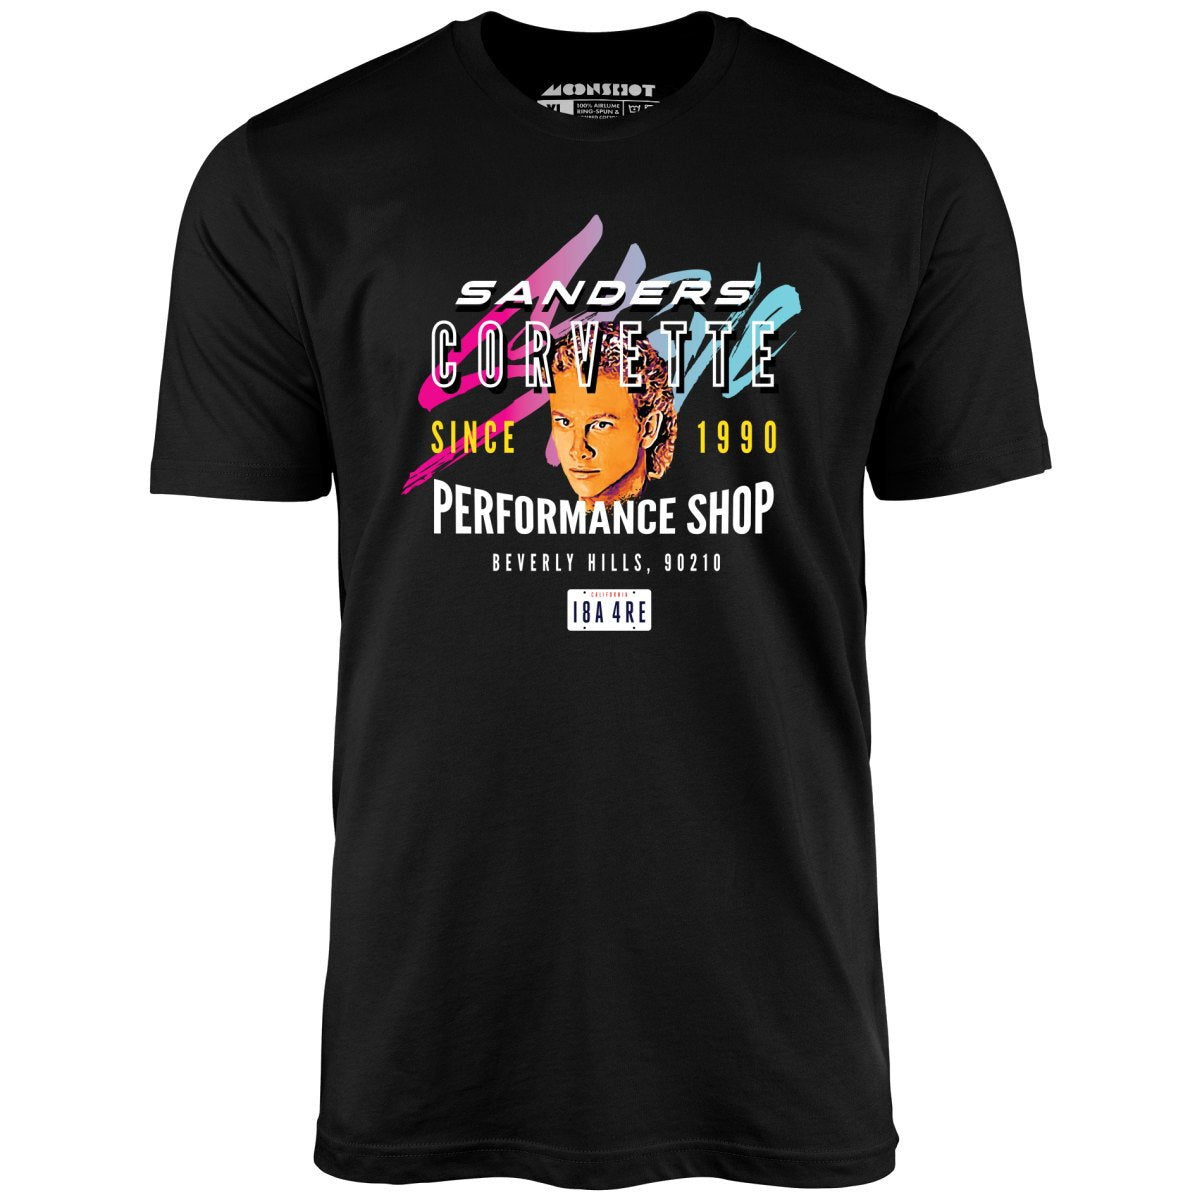 Steve Sanders Corvette Performance Shop - 90210 - Unisex T-Shirt